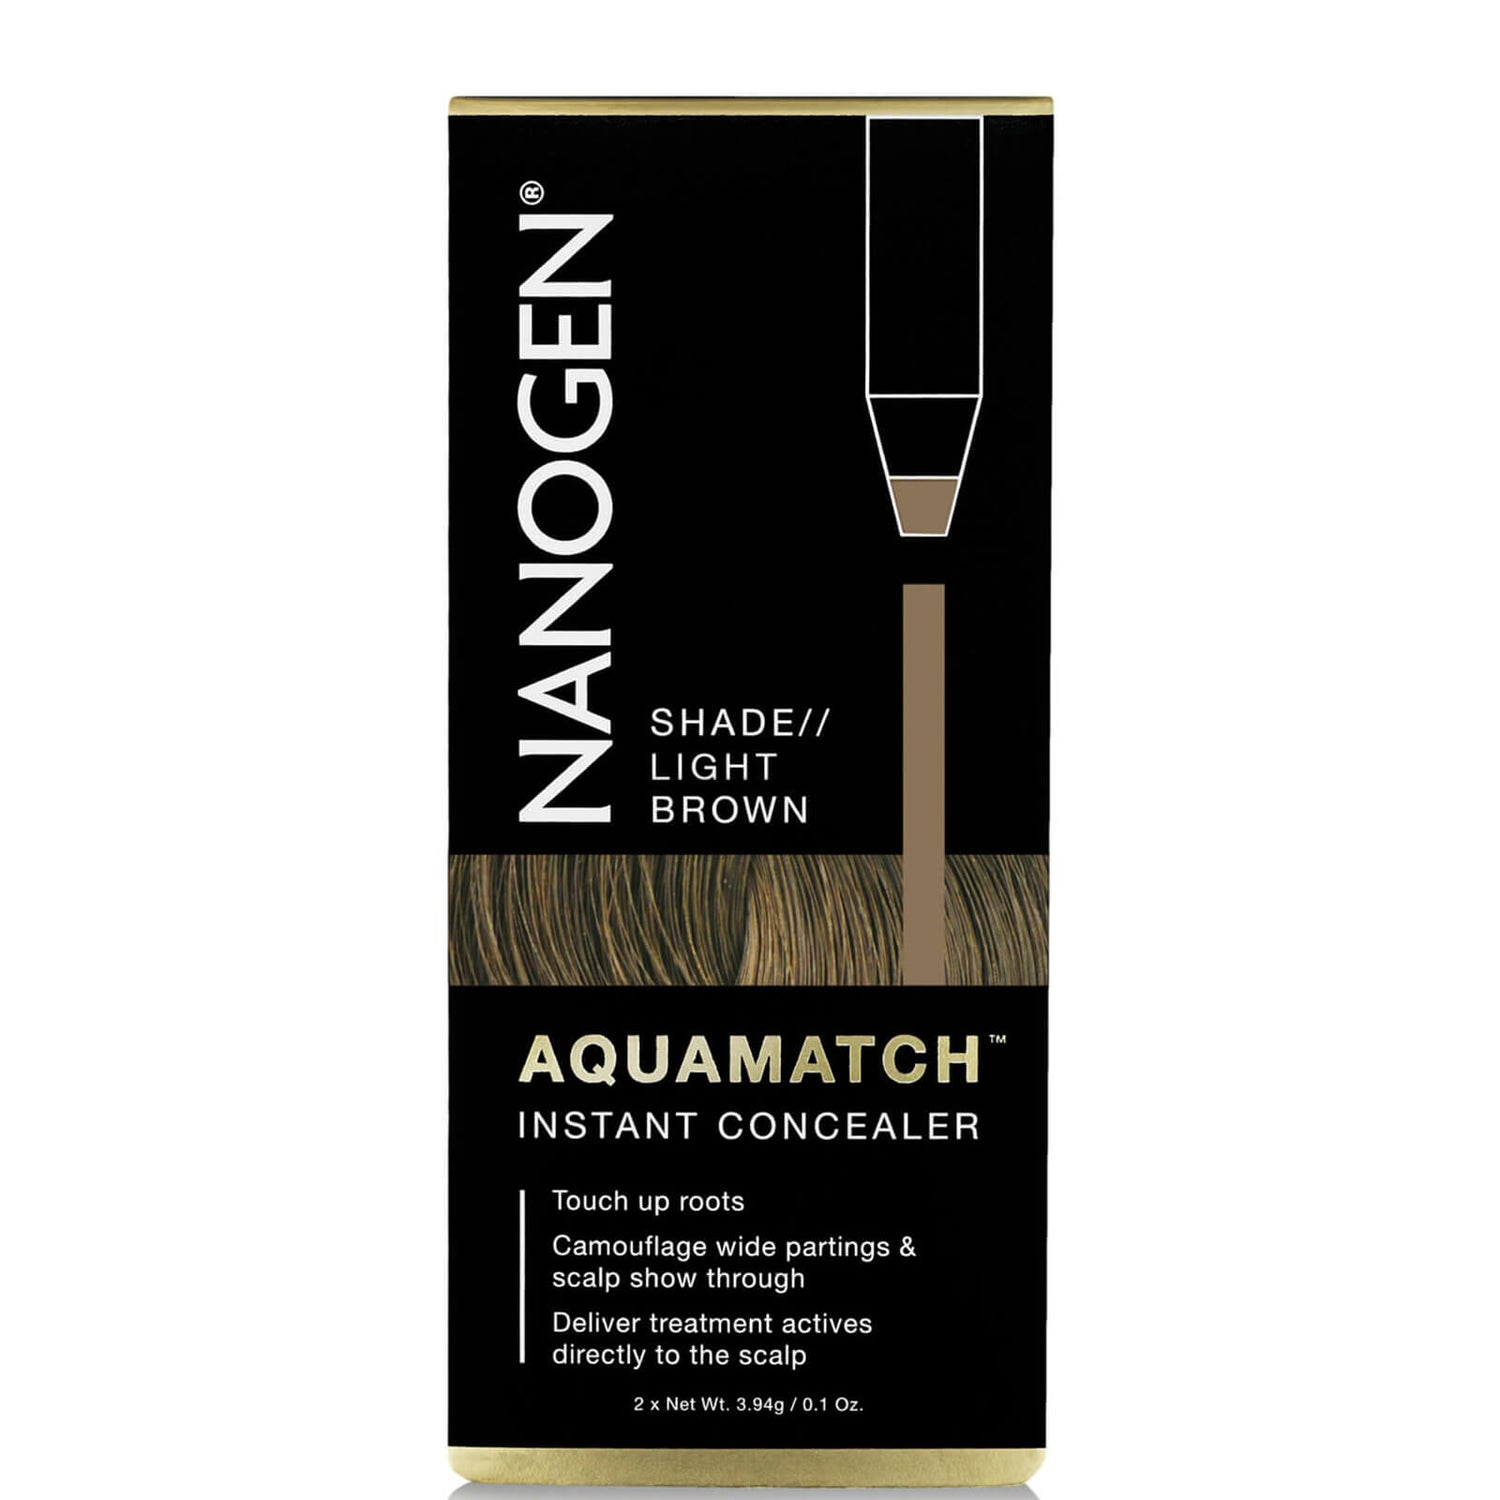 Aquamatch Nanogen brun clair (2x3)